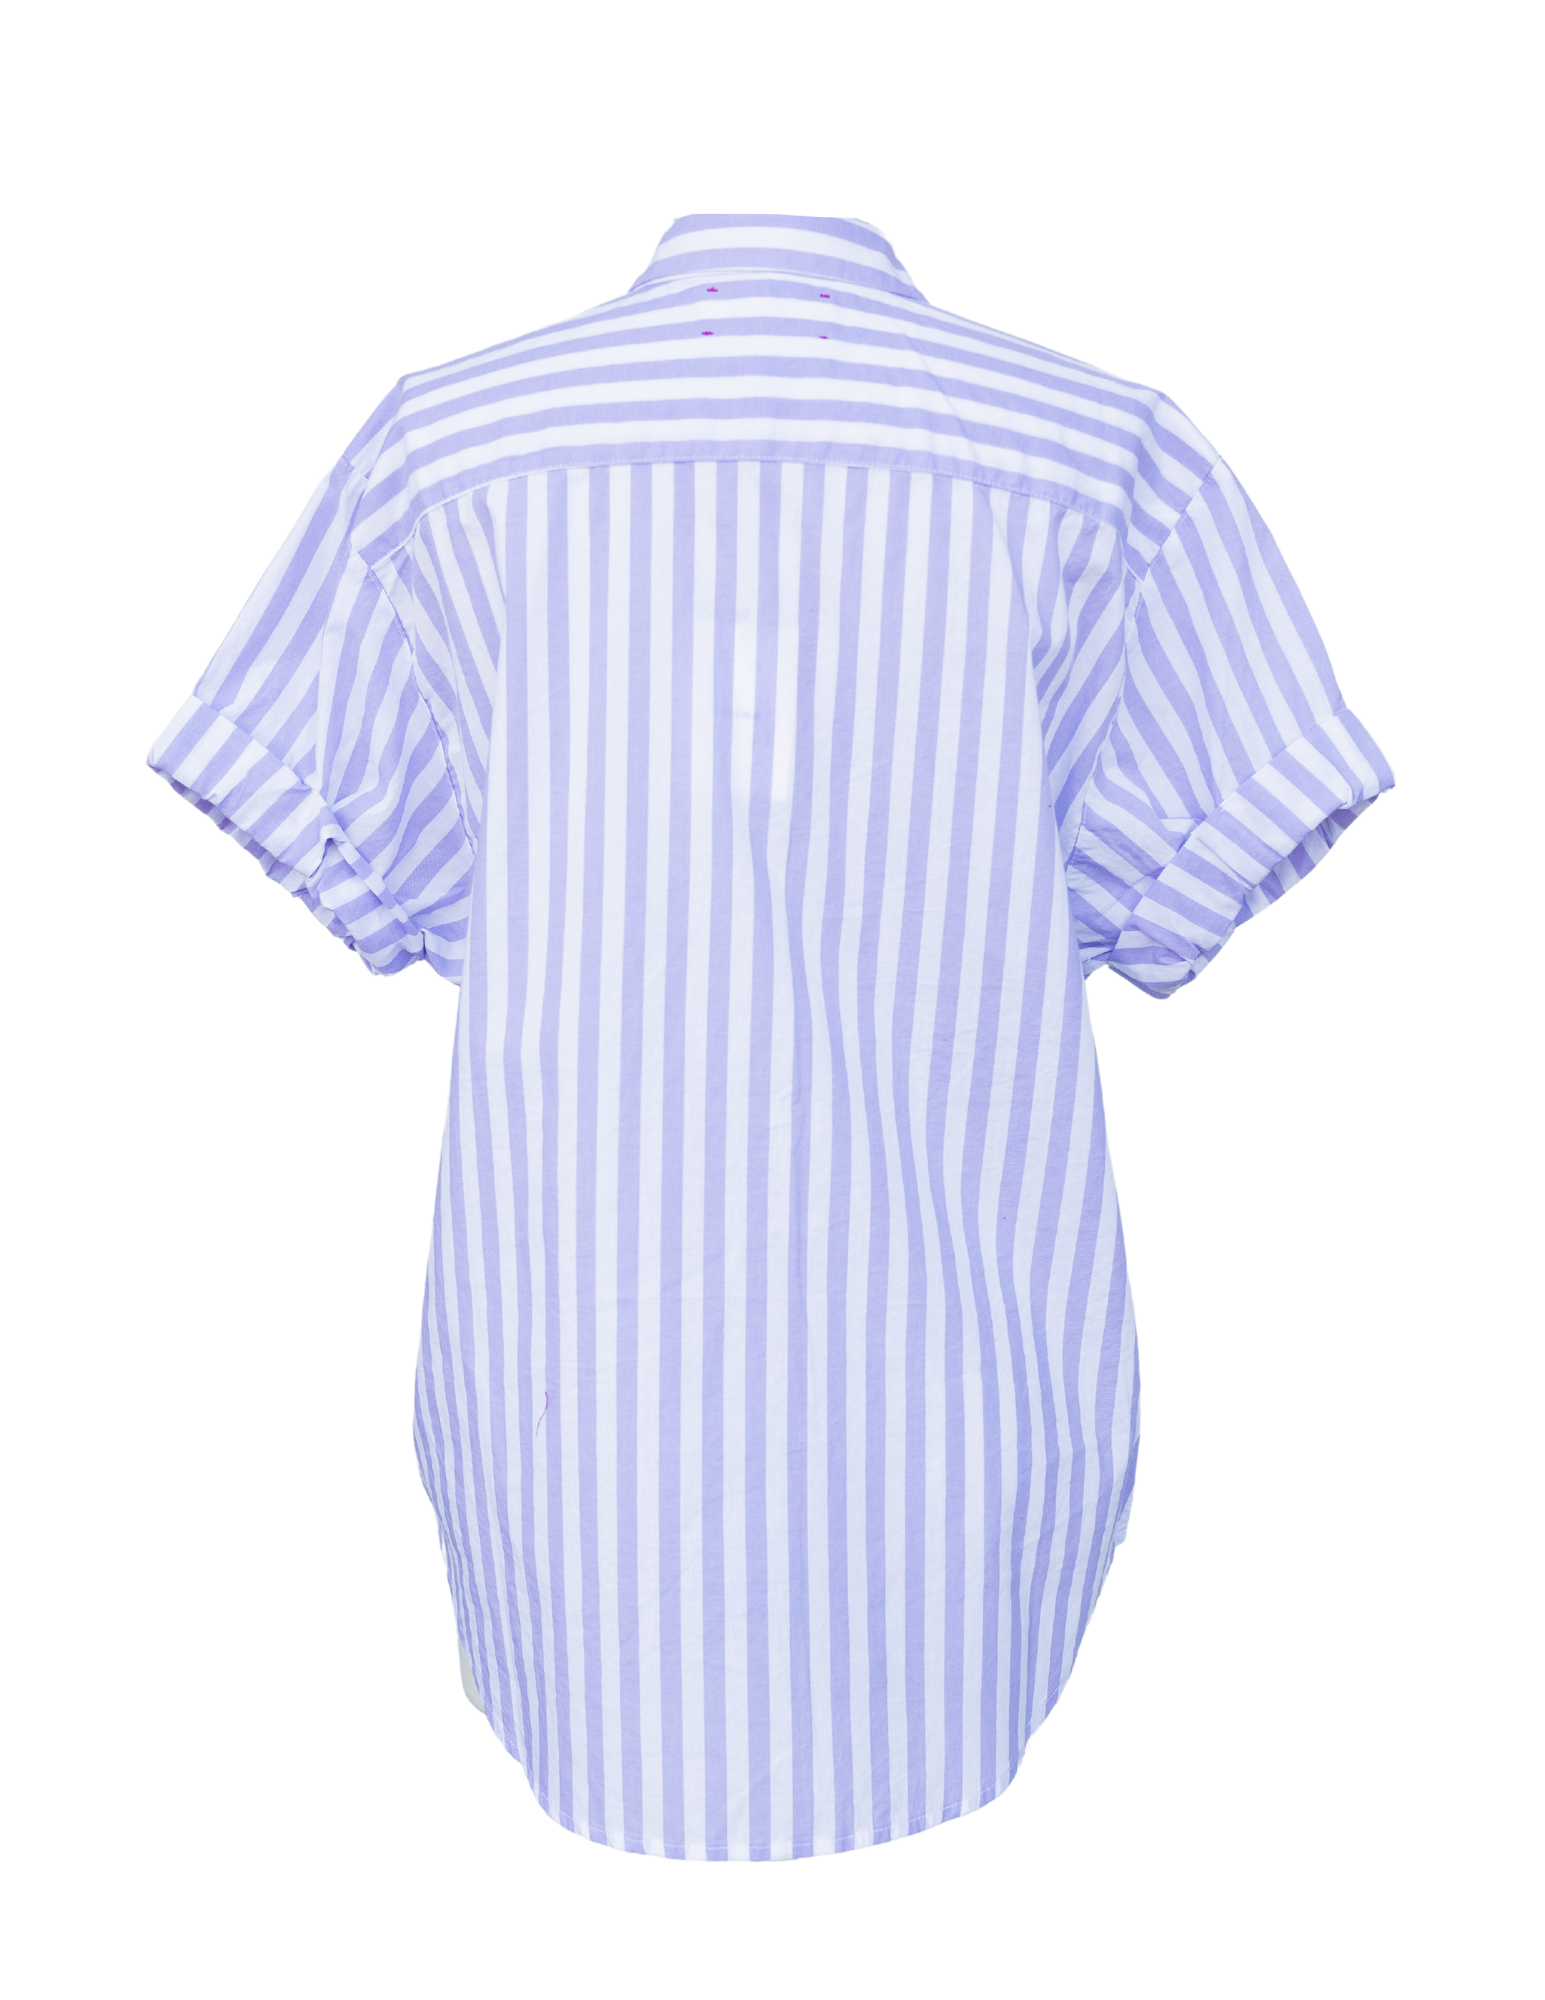 Channing Shirt - Amethyst Stripe